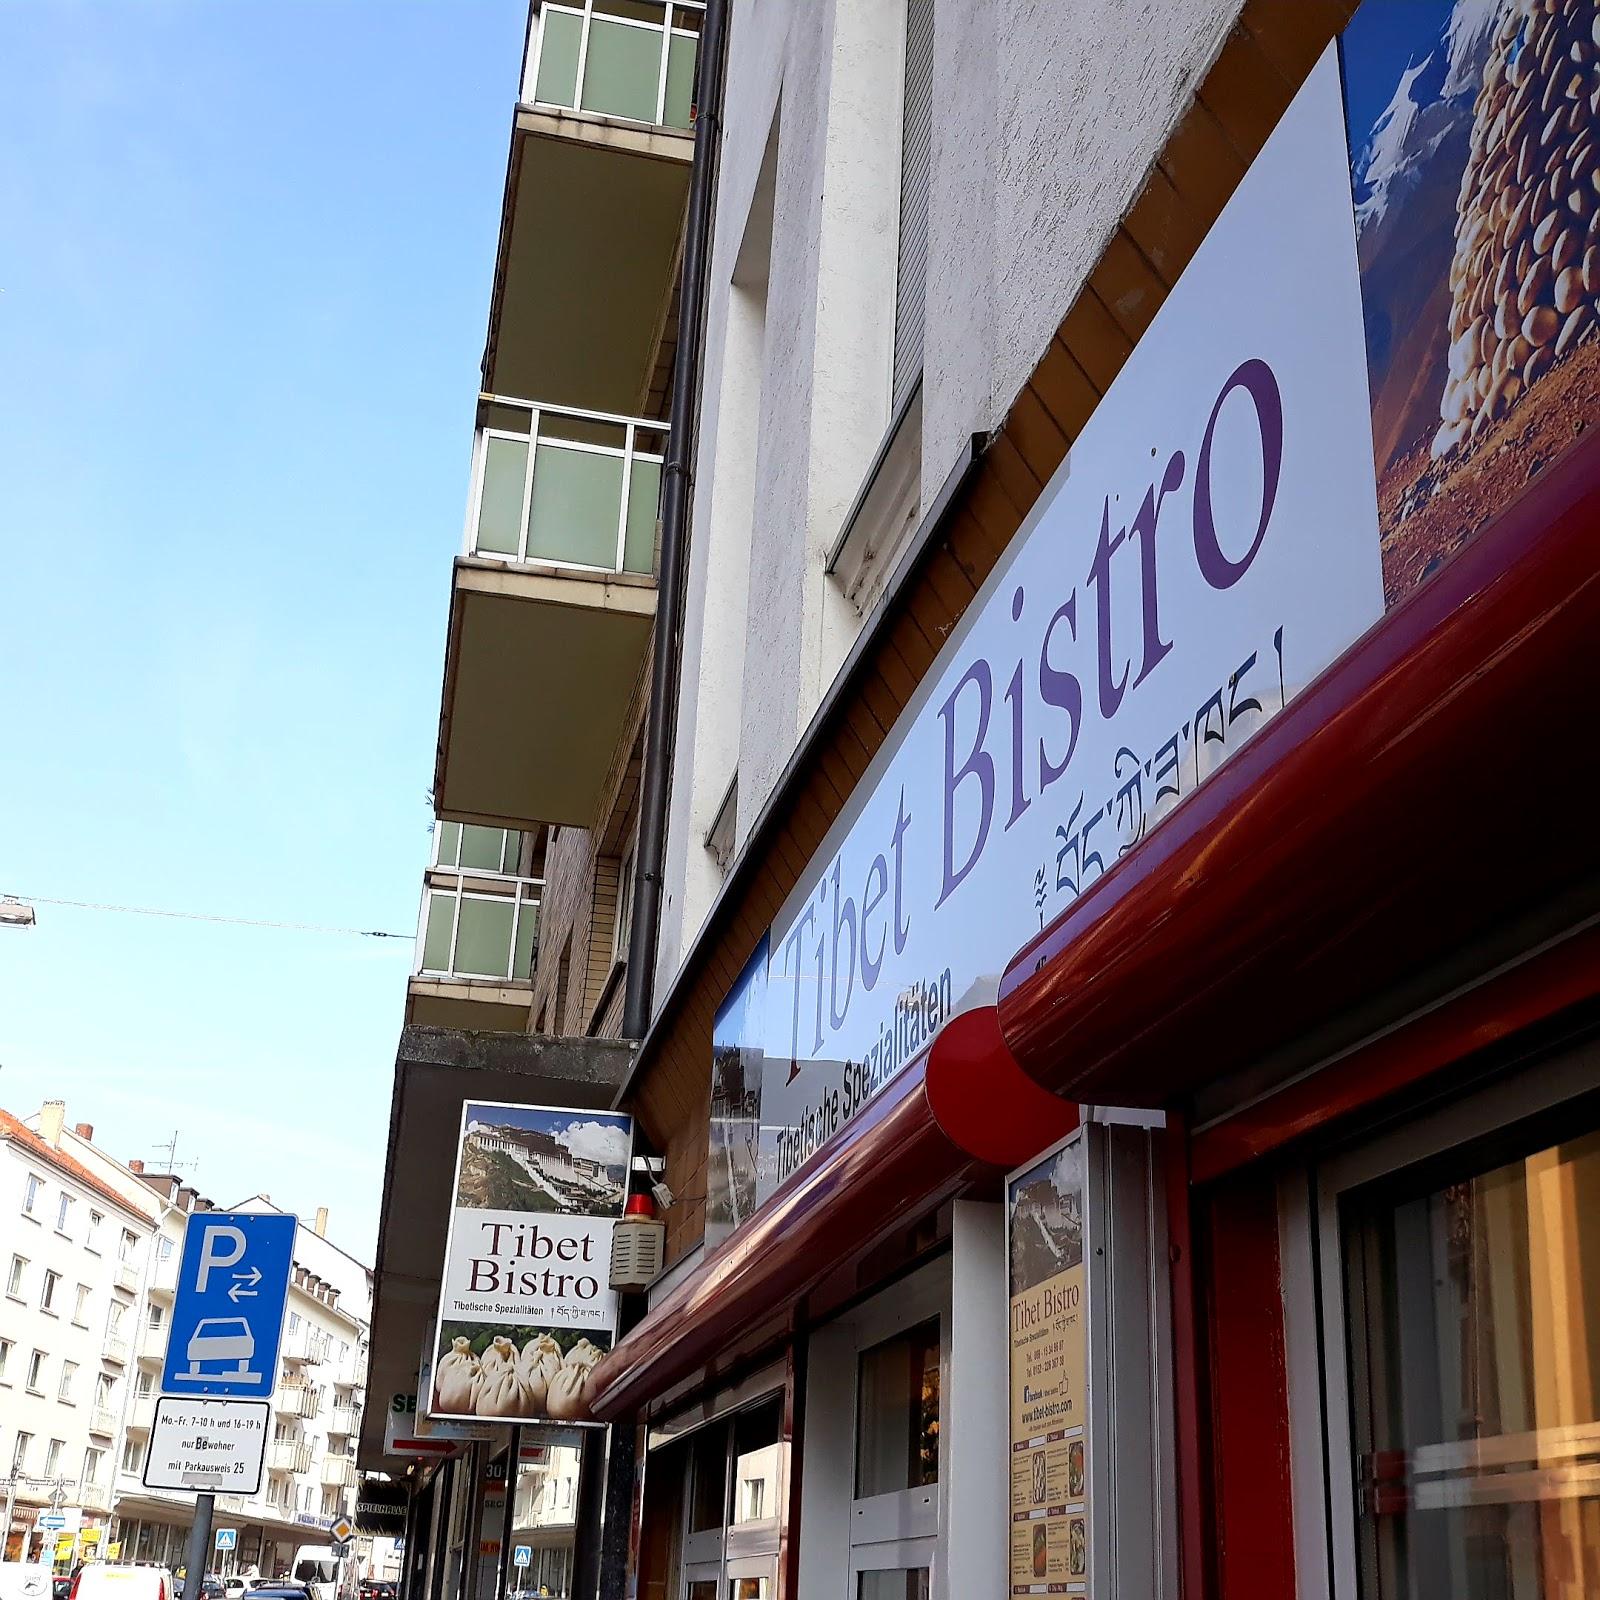 Restaurant "Tibet Bistro" in Frankfurt am Main